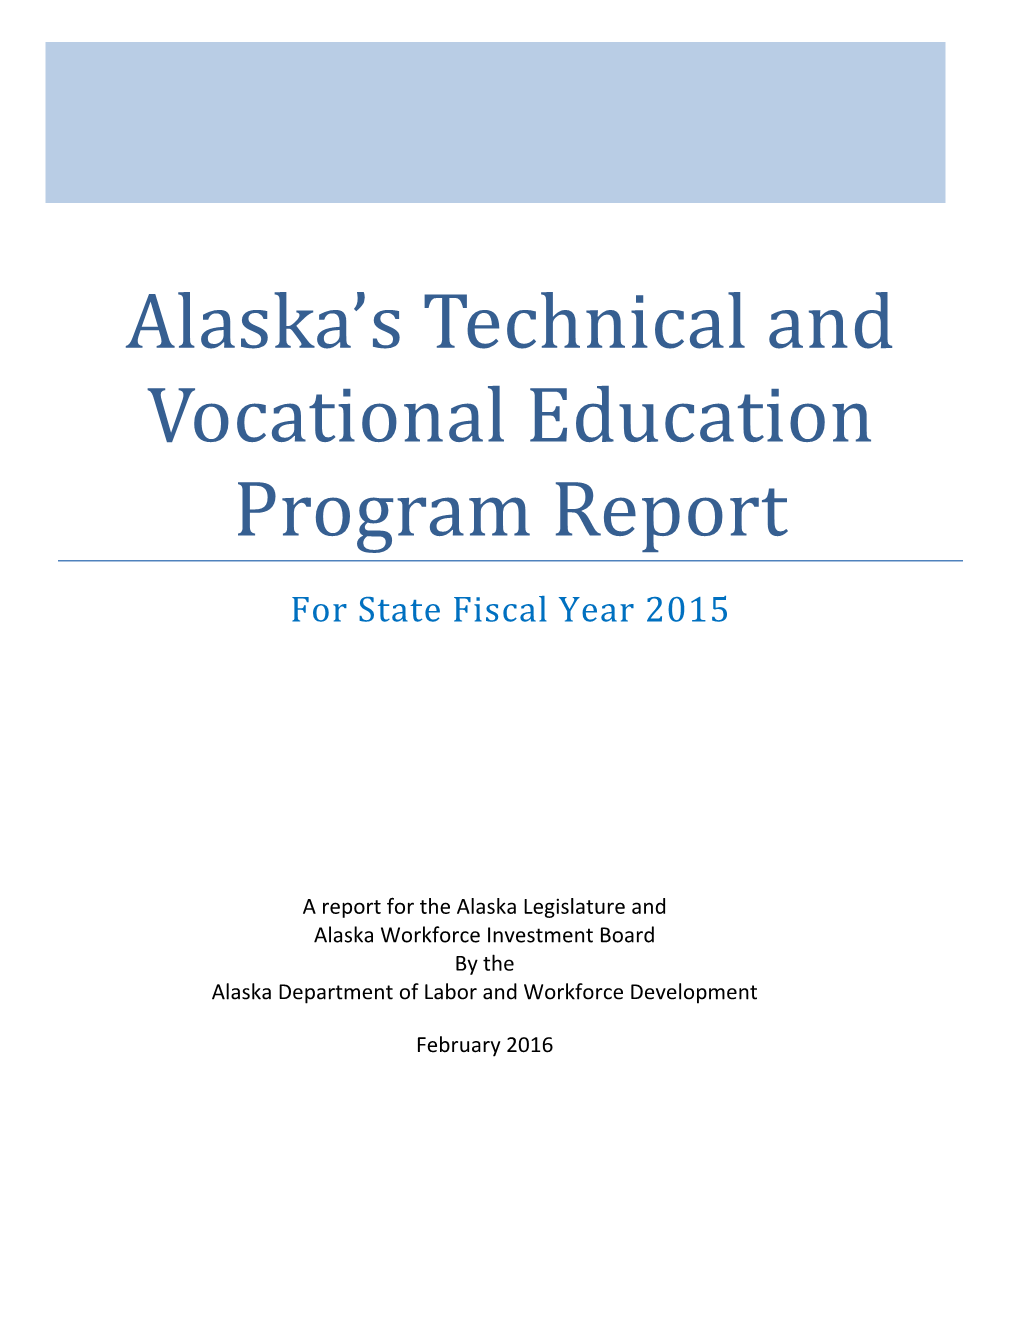 Alaska's Technical and Vocational Education Program Report